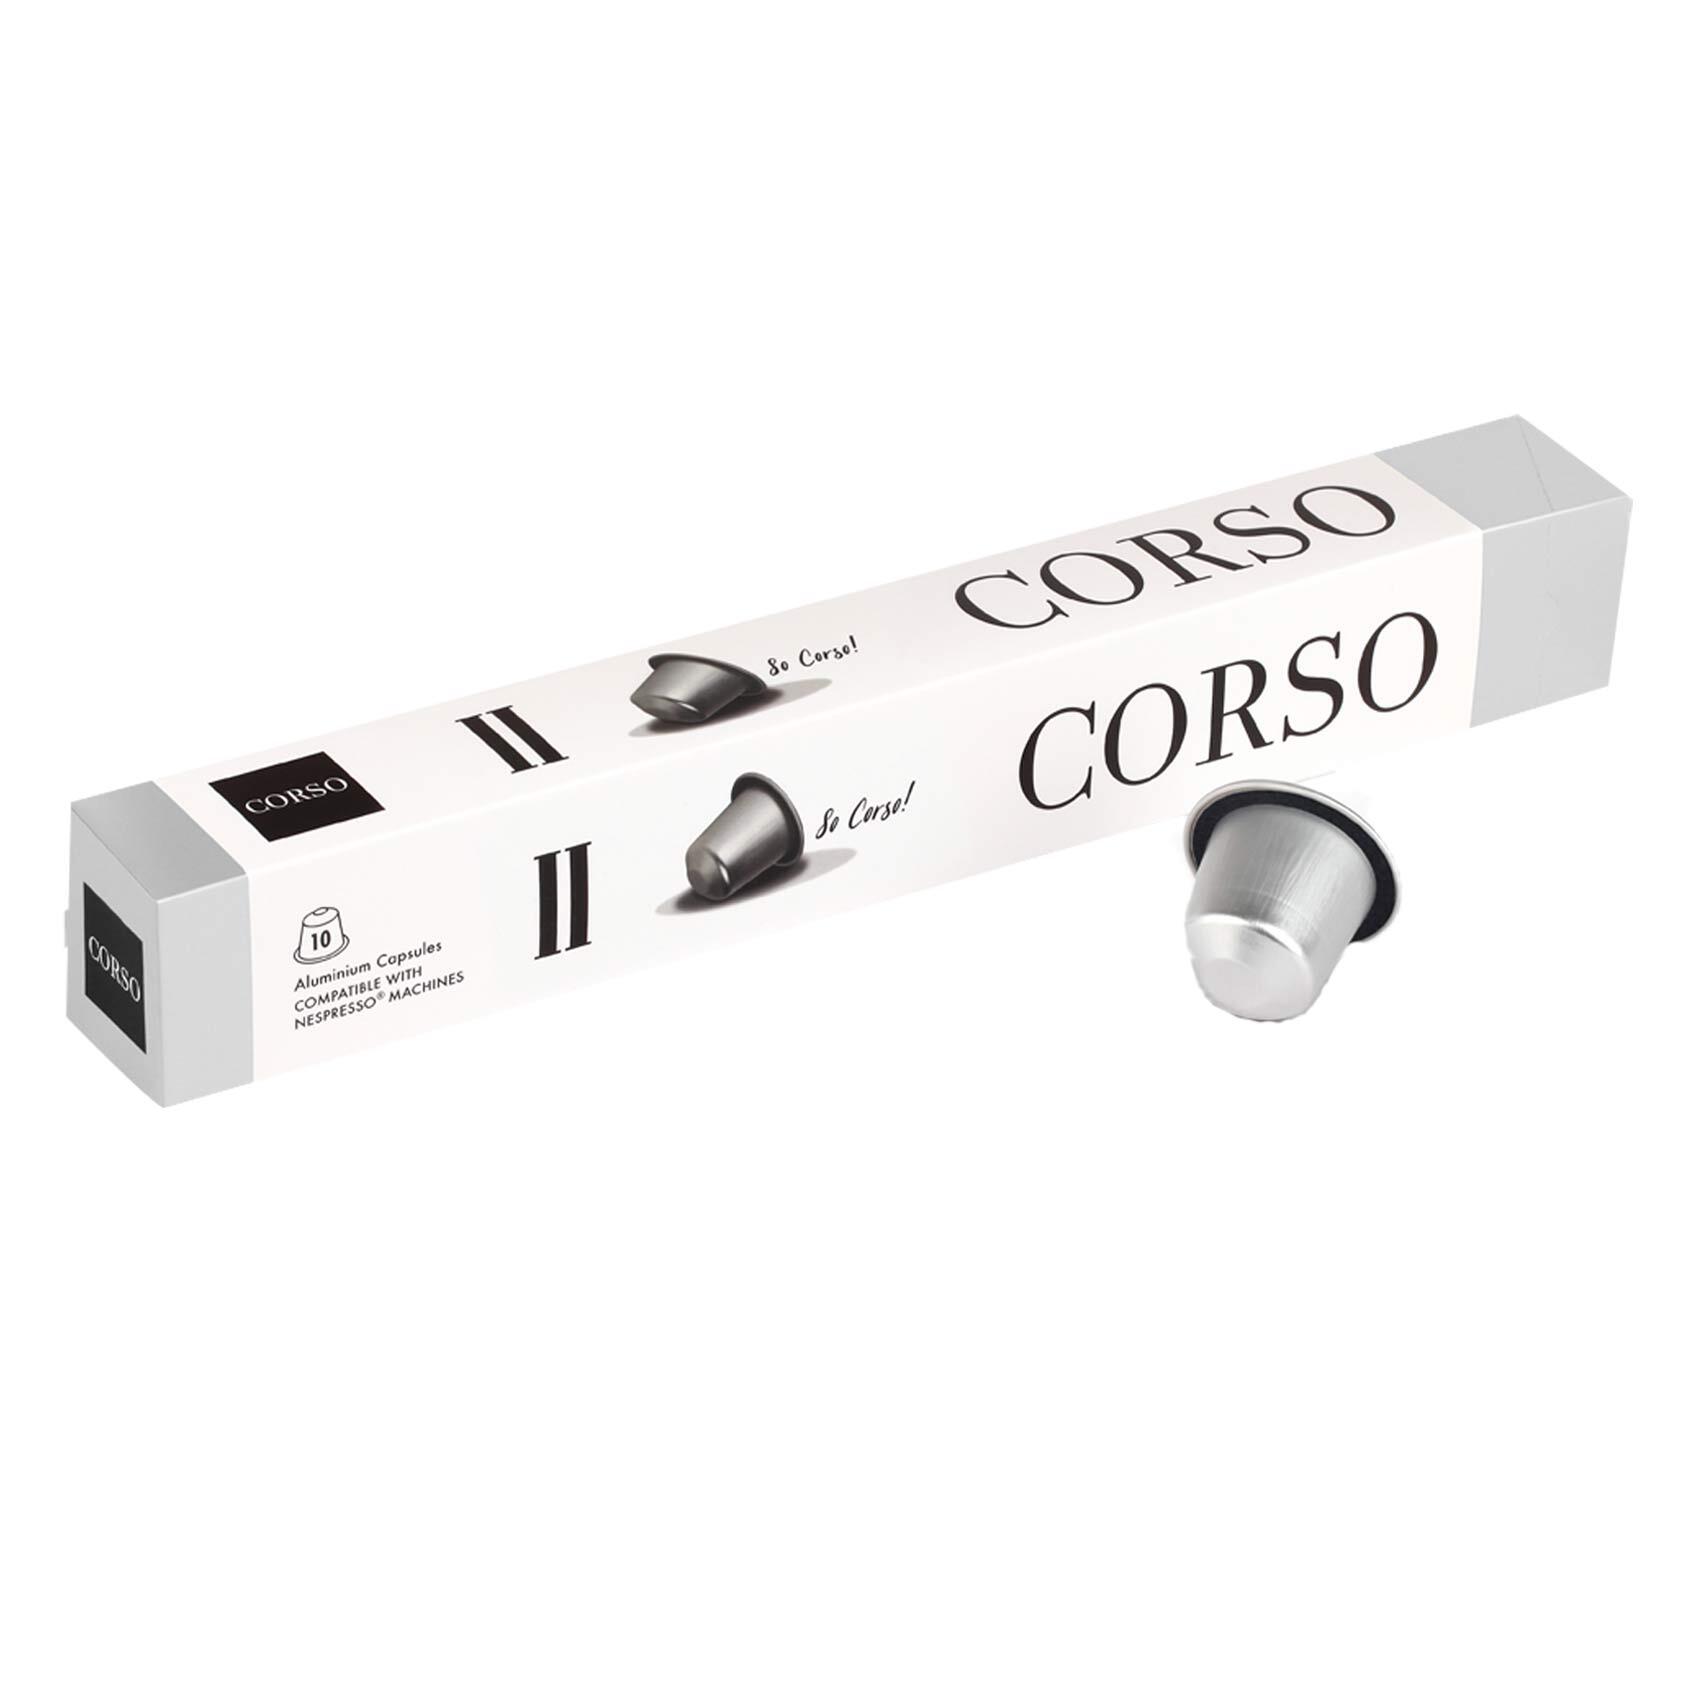 Buy Corso Cap Nespresso Silver 5.5GRX11 Online - Shop Beverages on